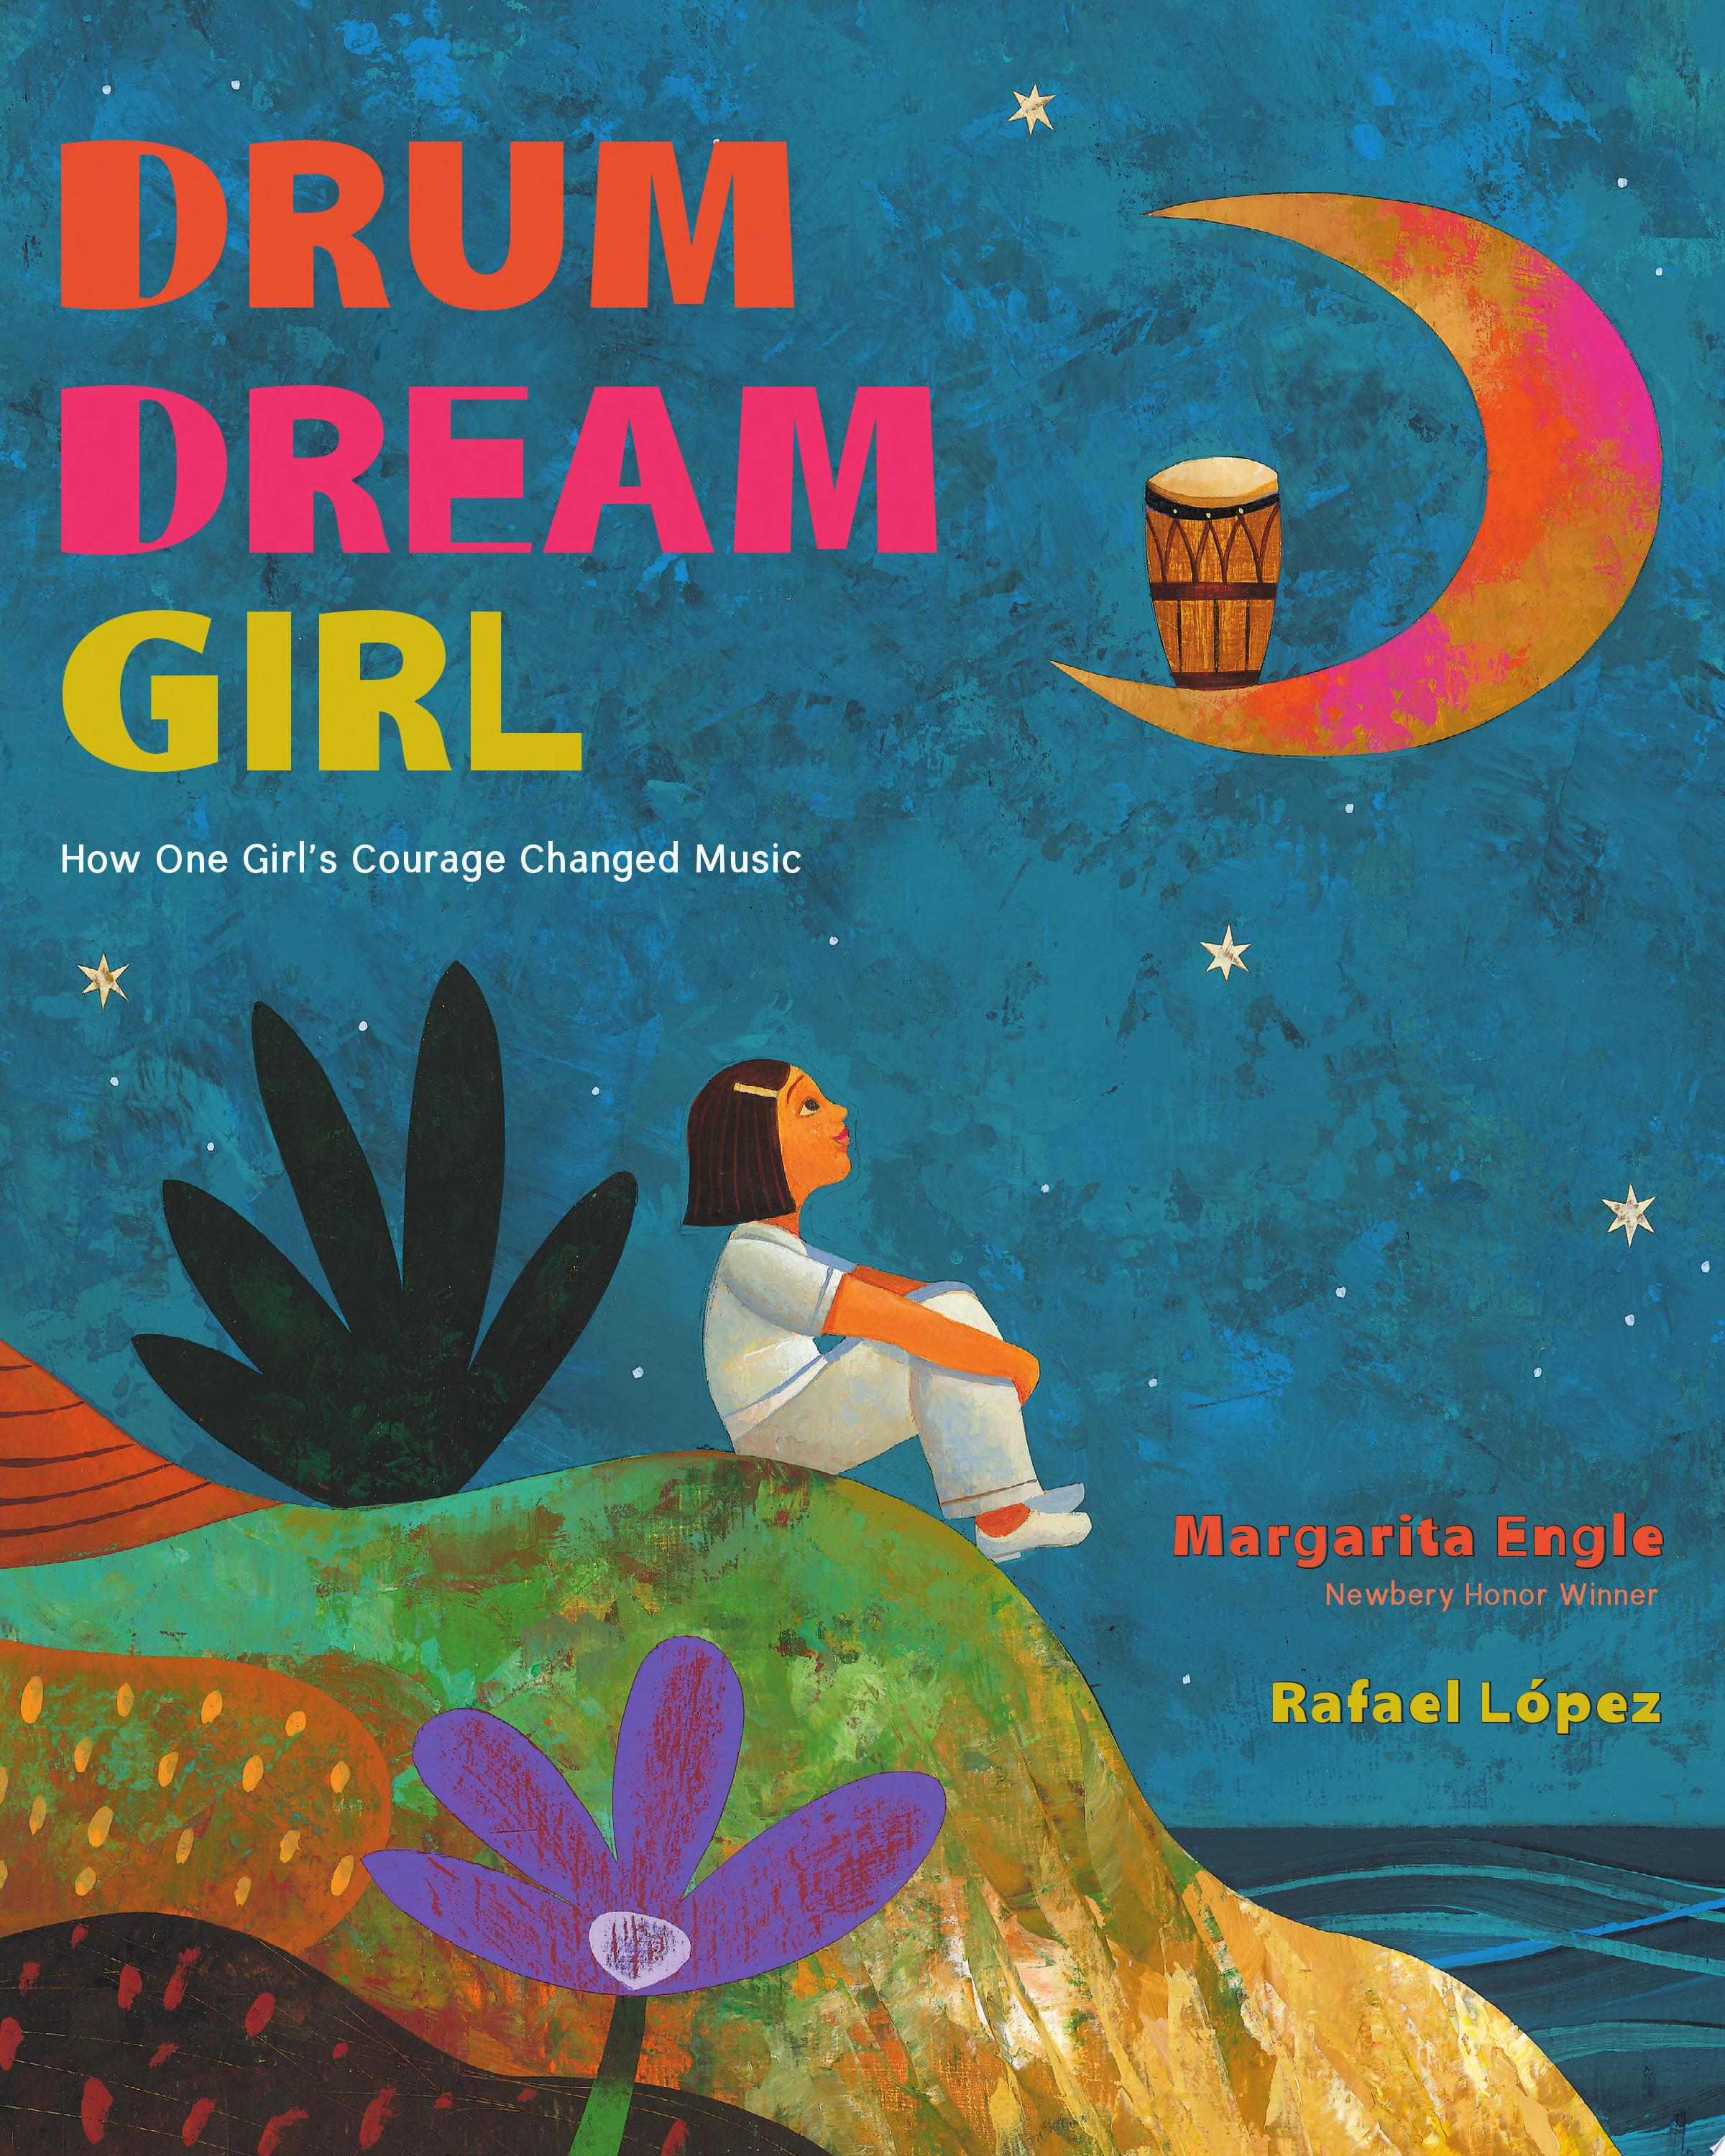 Image for "Drum Dream Girl"